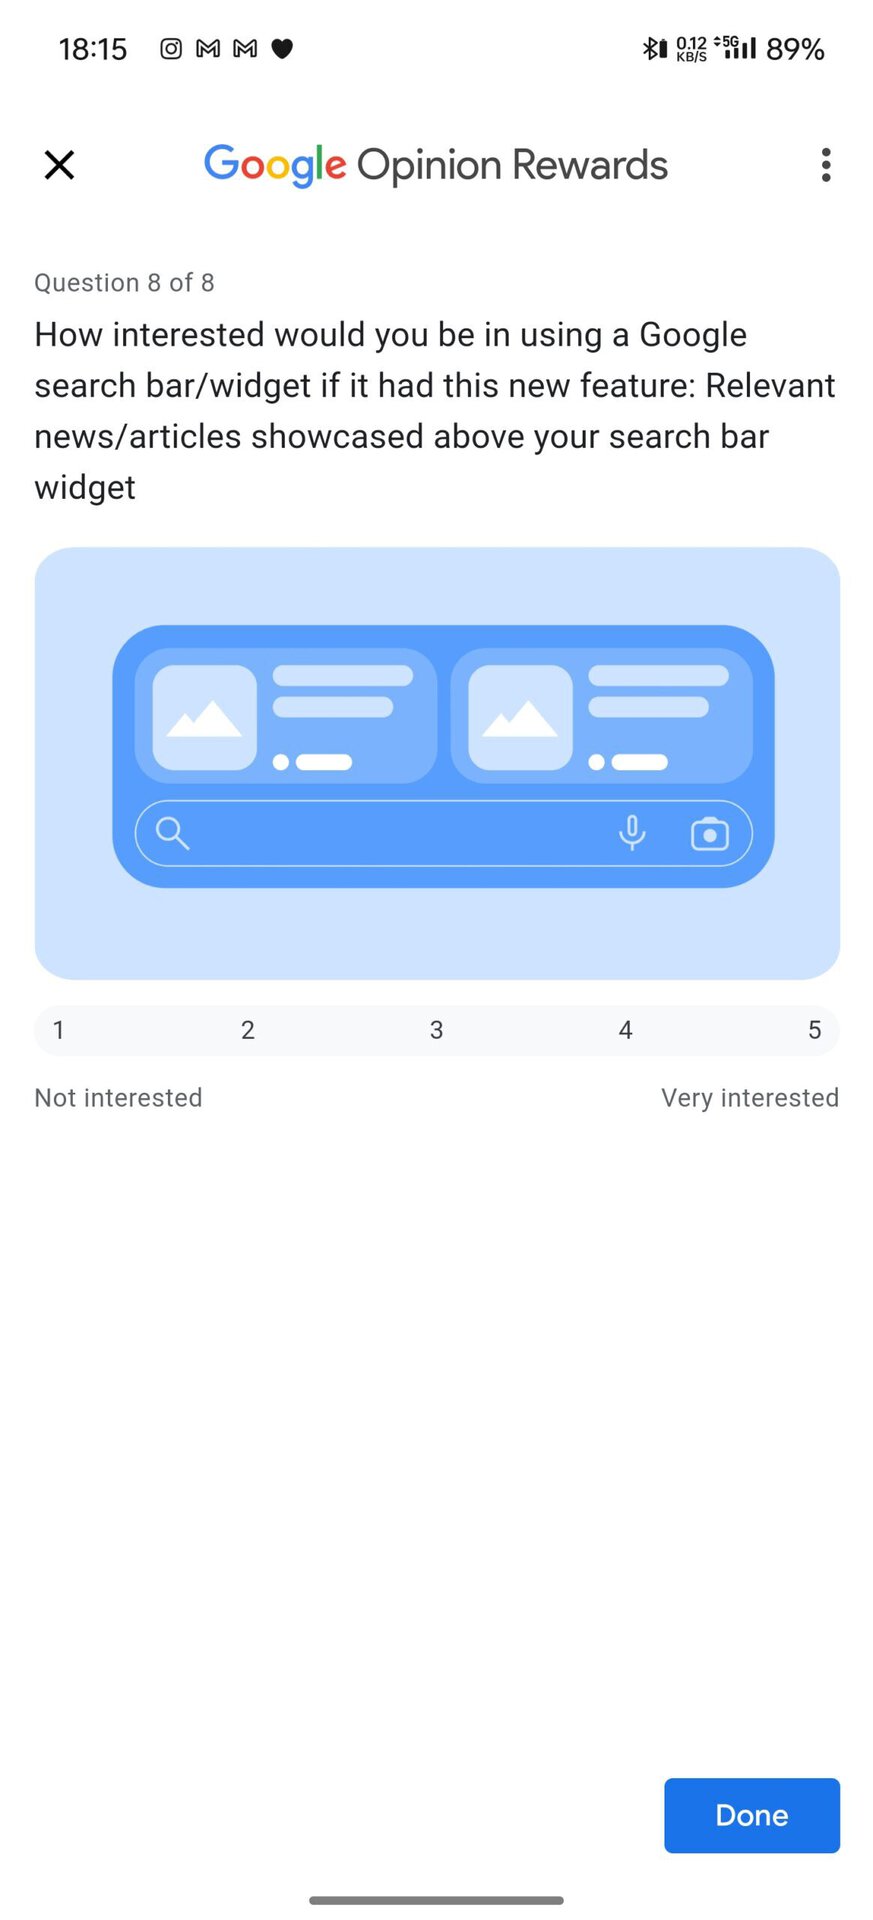 Google Opinion Rewards survery Google Search Home screen widget (4)